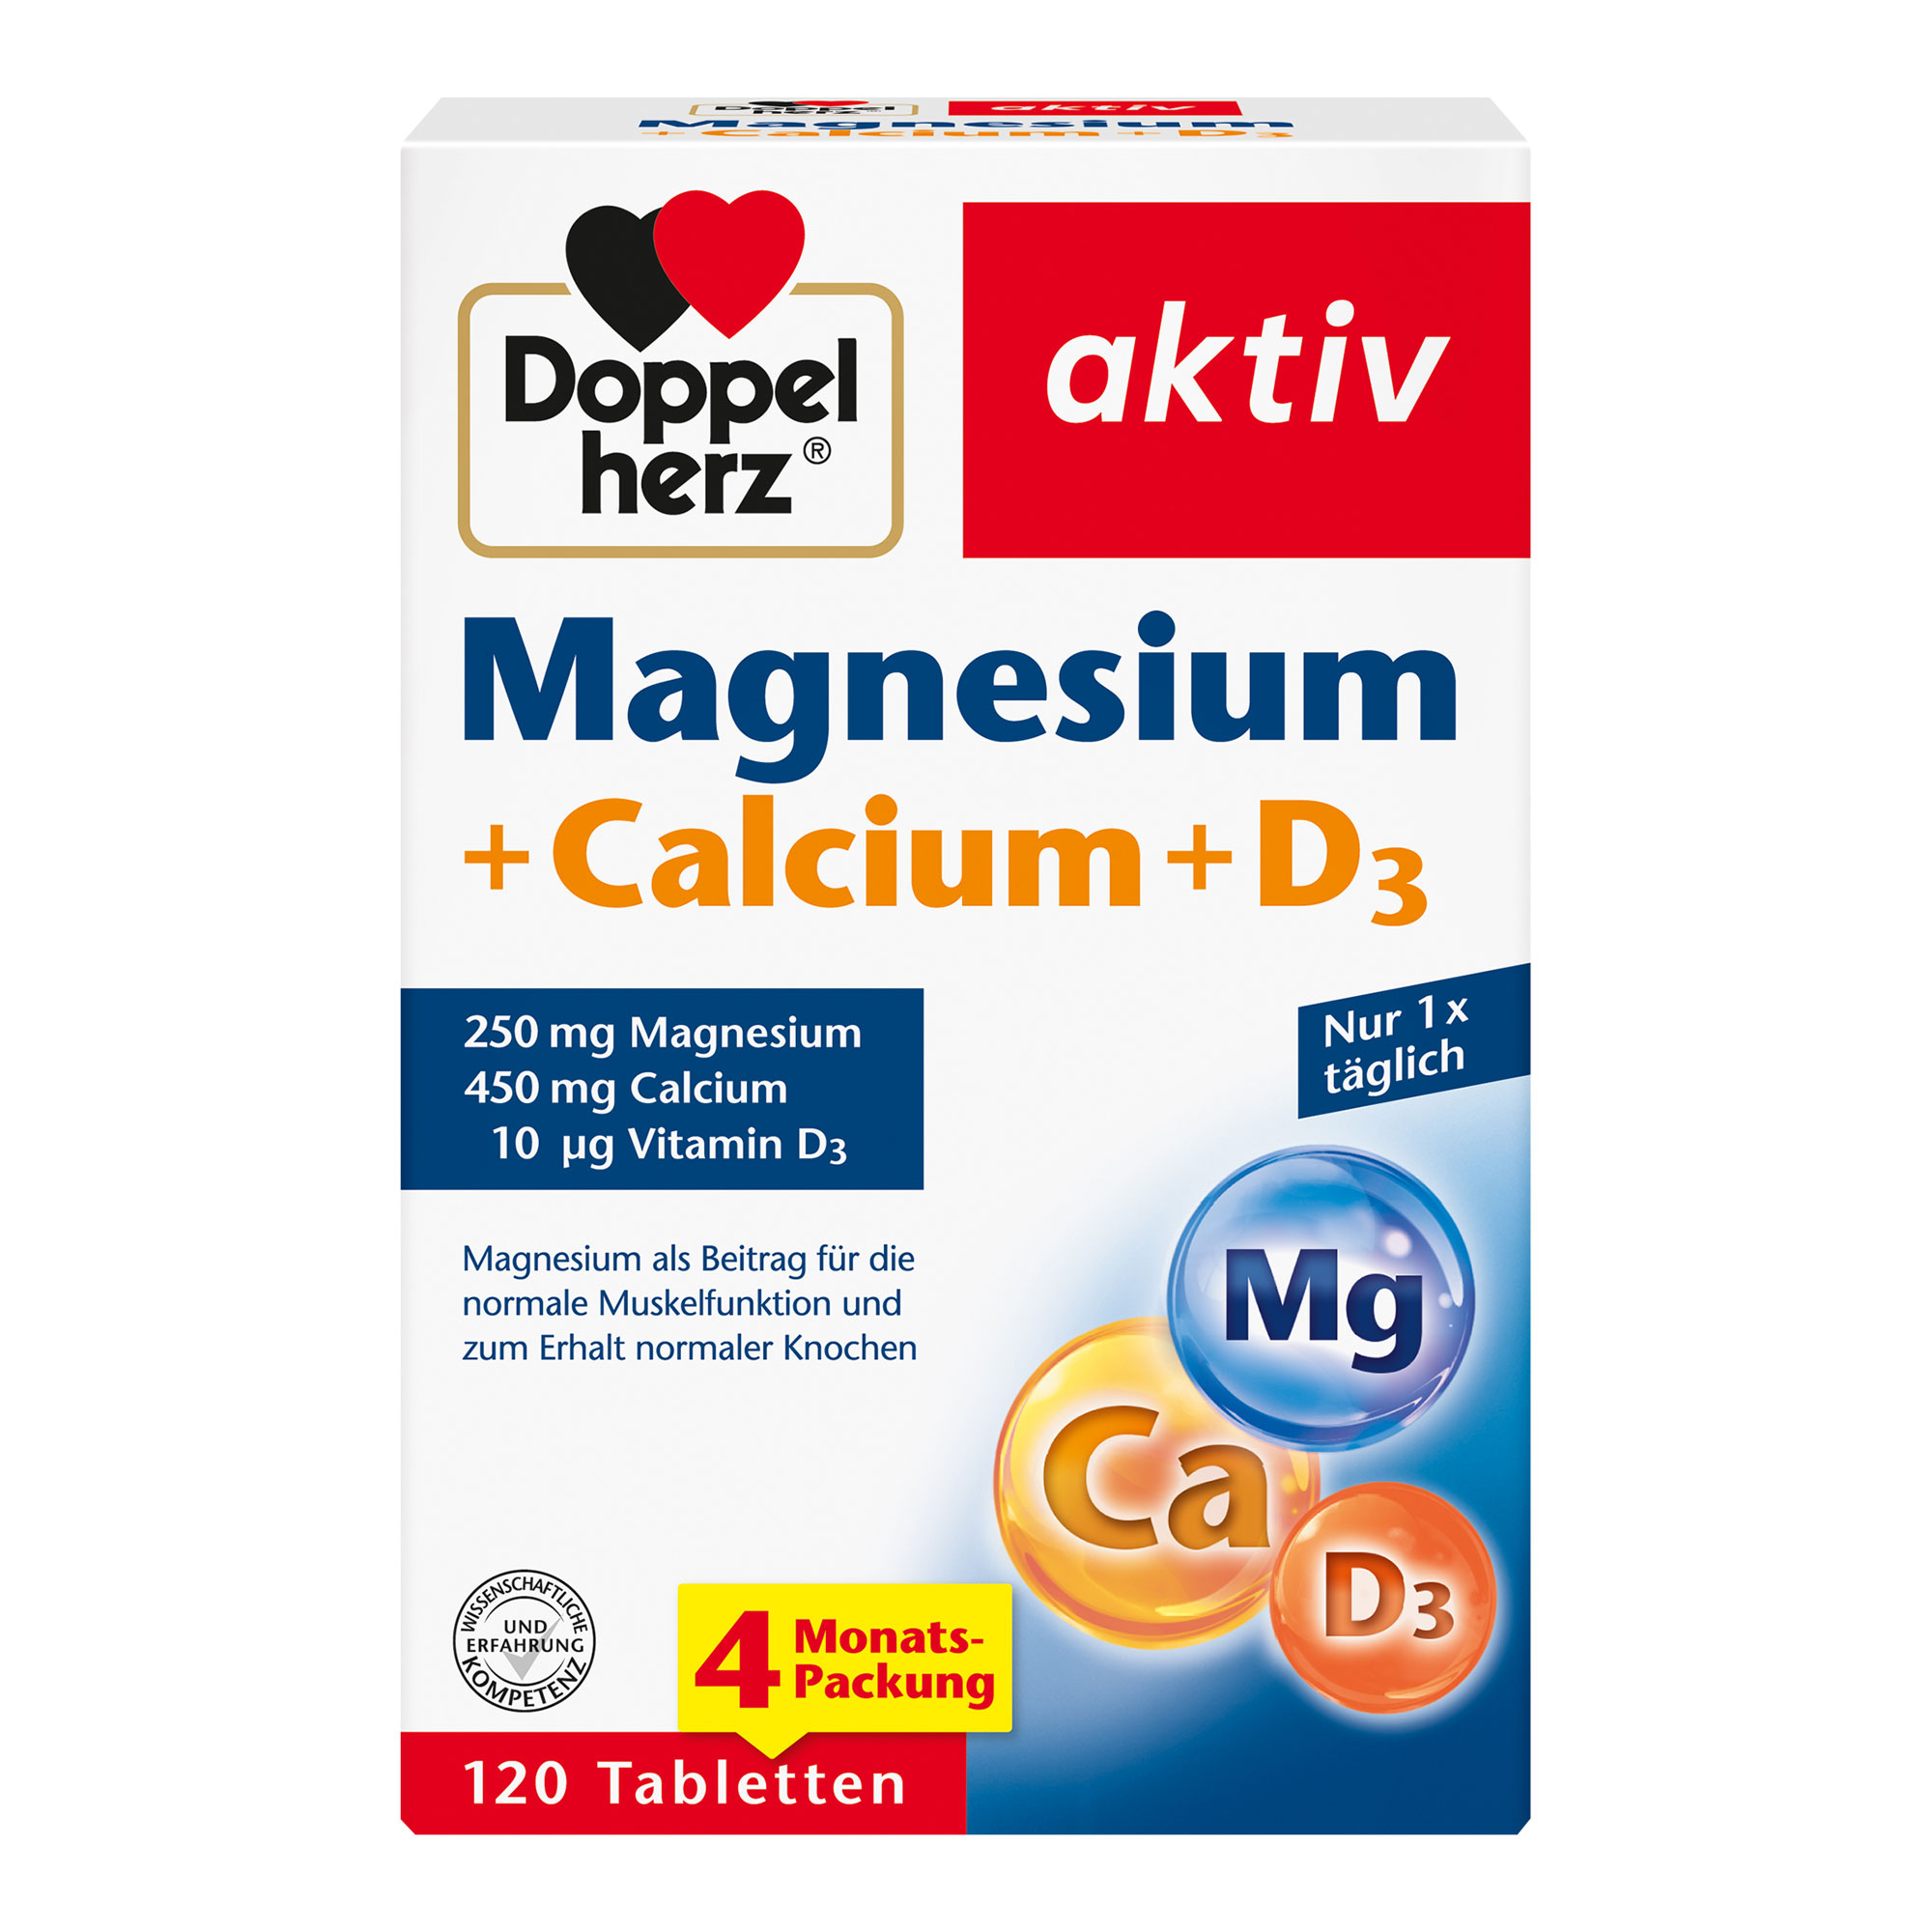 Nahrungsergänzungsmittel mit Magnesium, Calcium und Vitamin D.